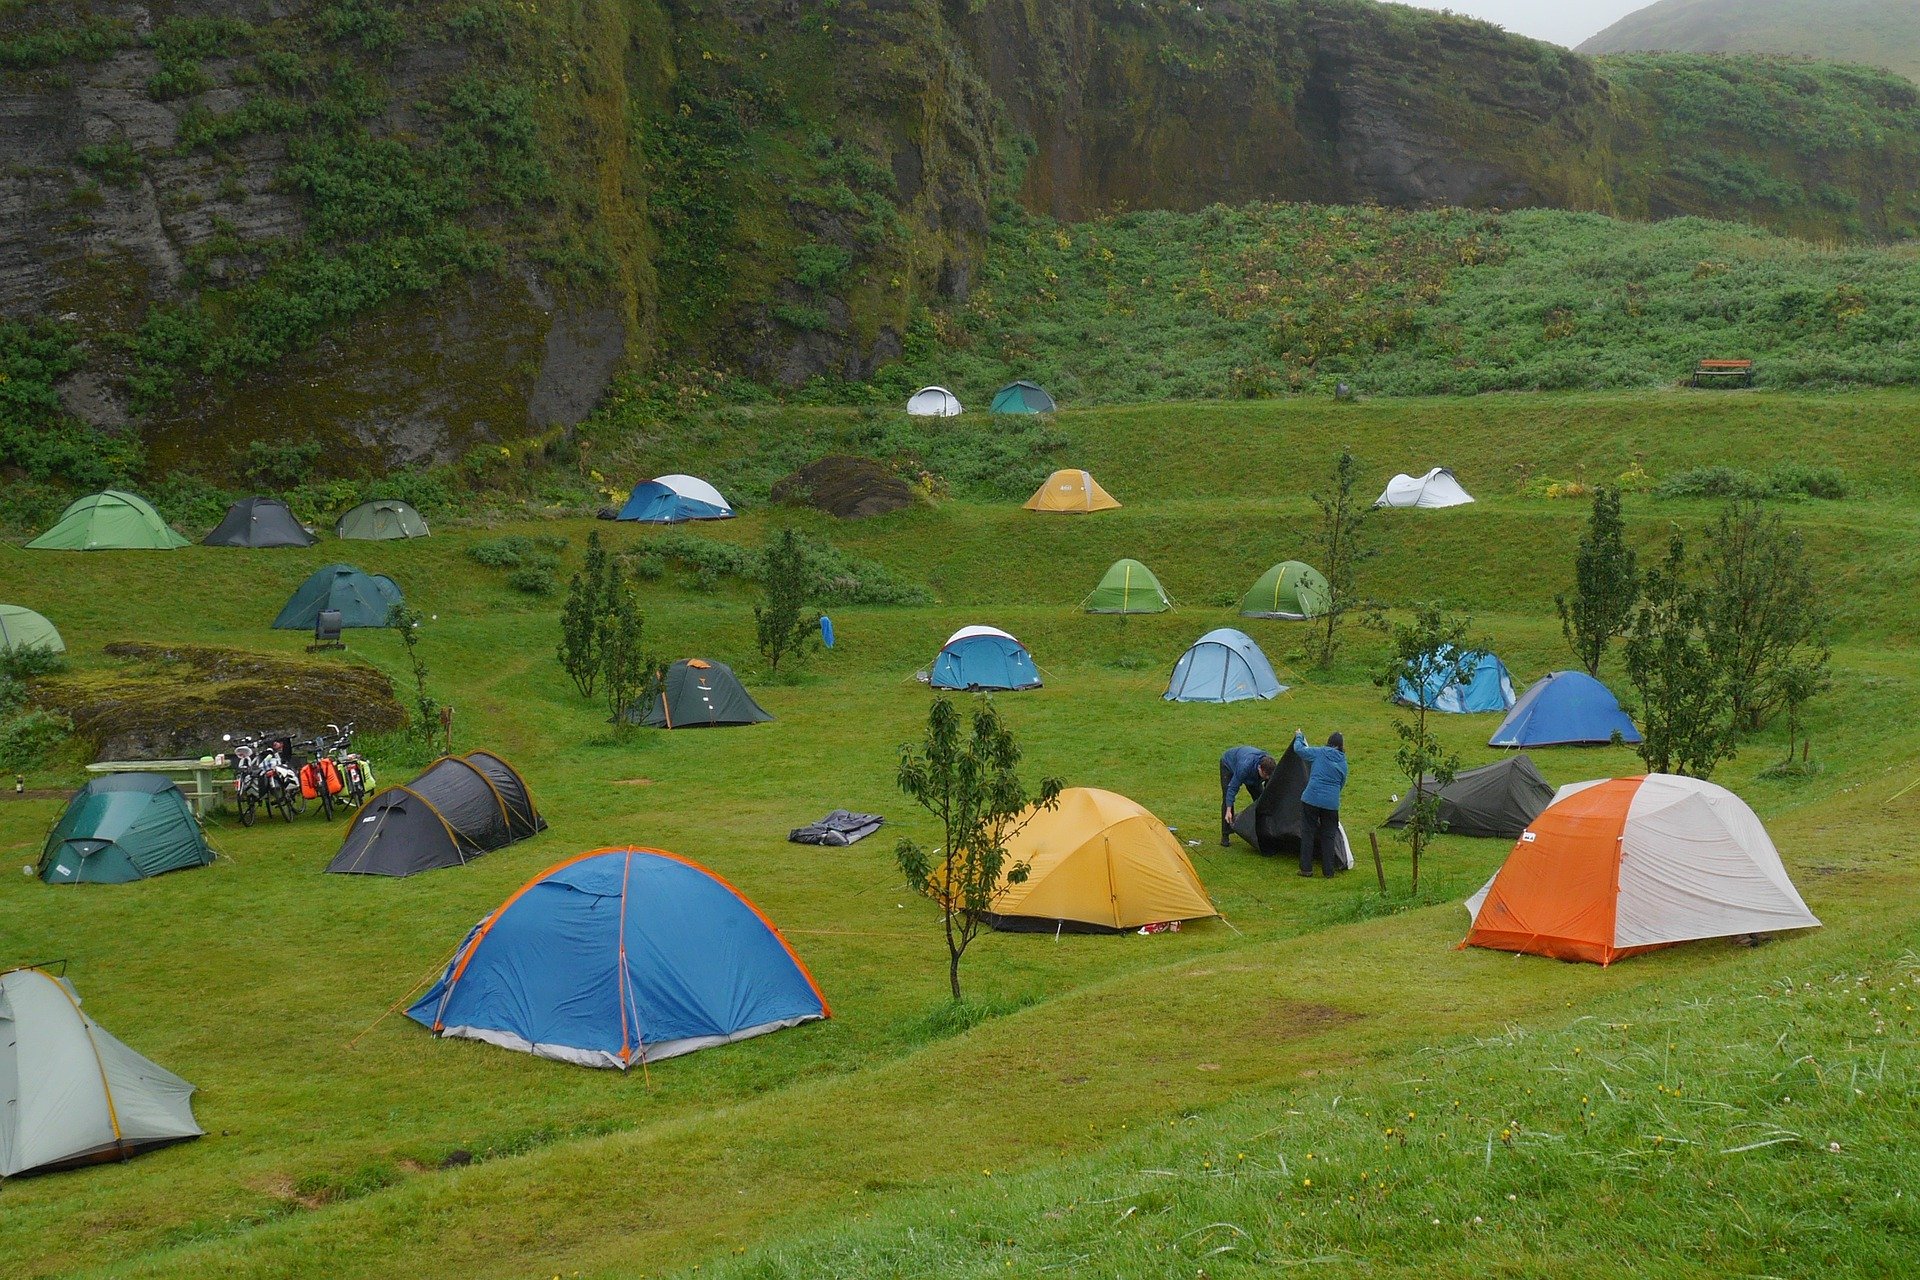 Кемпинг русский кемпинг. Палаточный кемпинг. Палаточный городок. Палаточный лагерь в горах. Кемпинг палаточный лагерь.